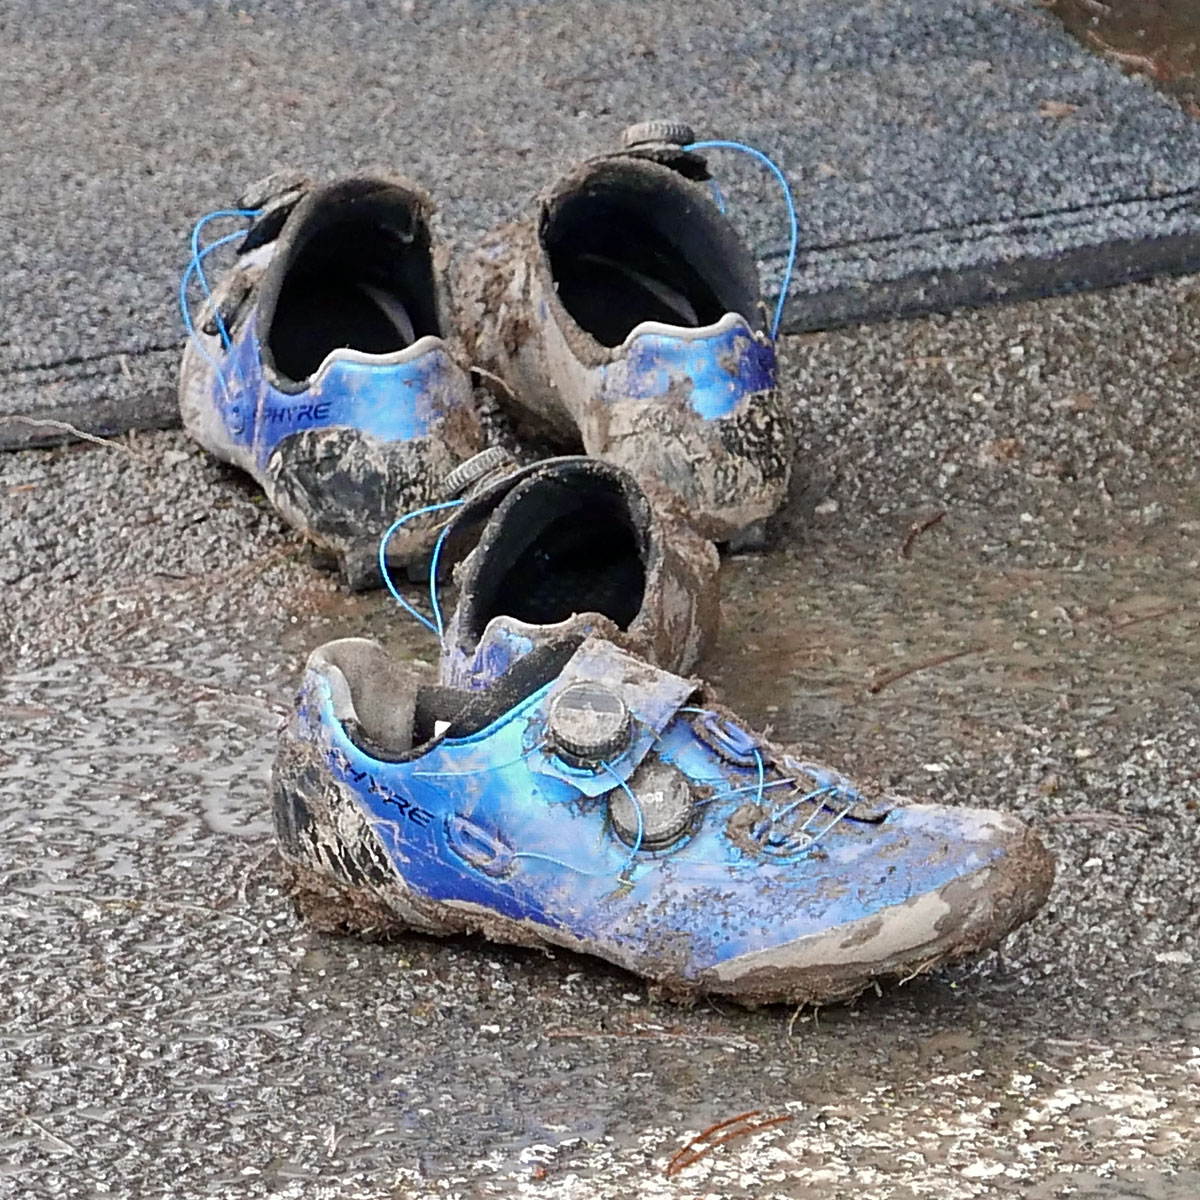 MvdP's Shimano S-Phyre XC9 muddy shoes